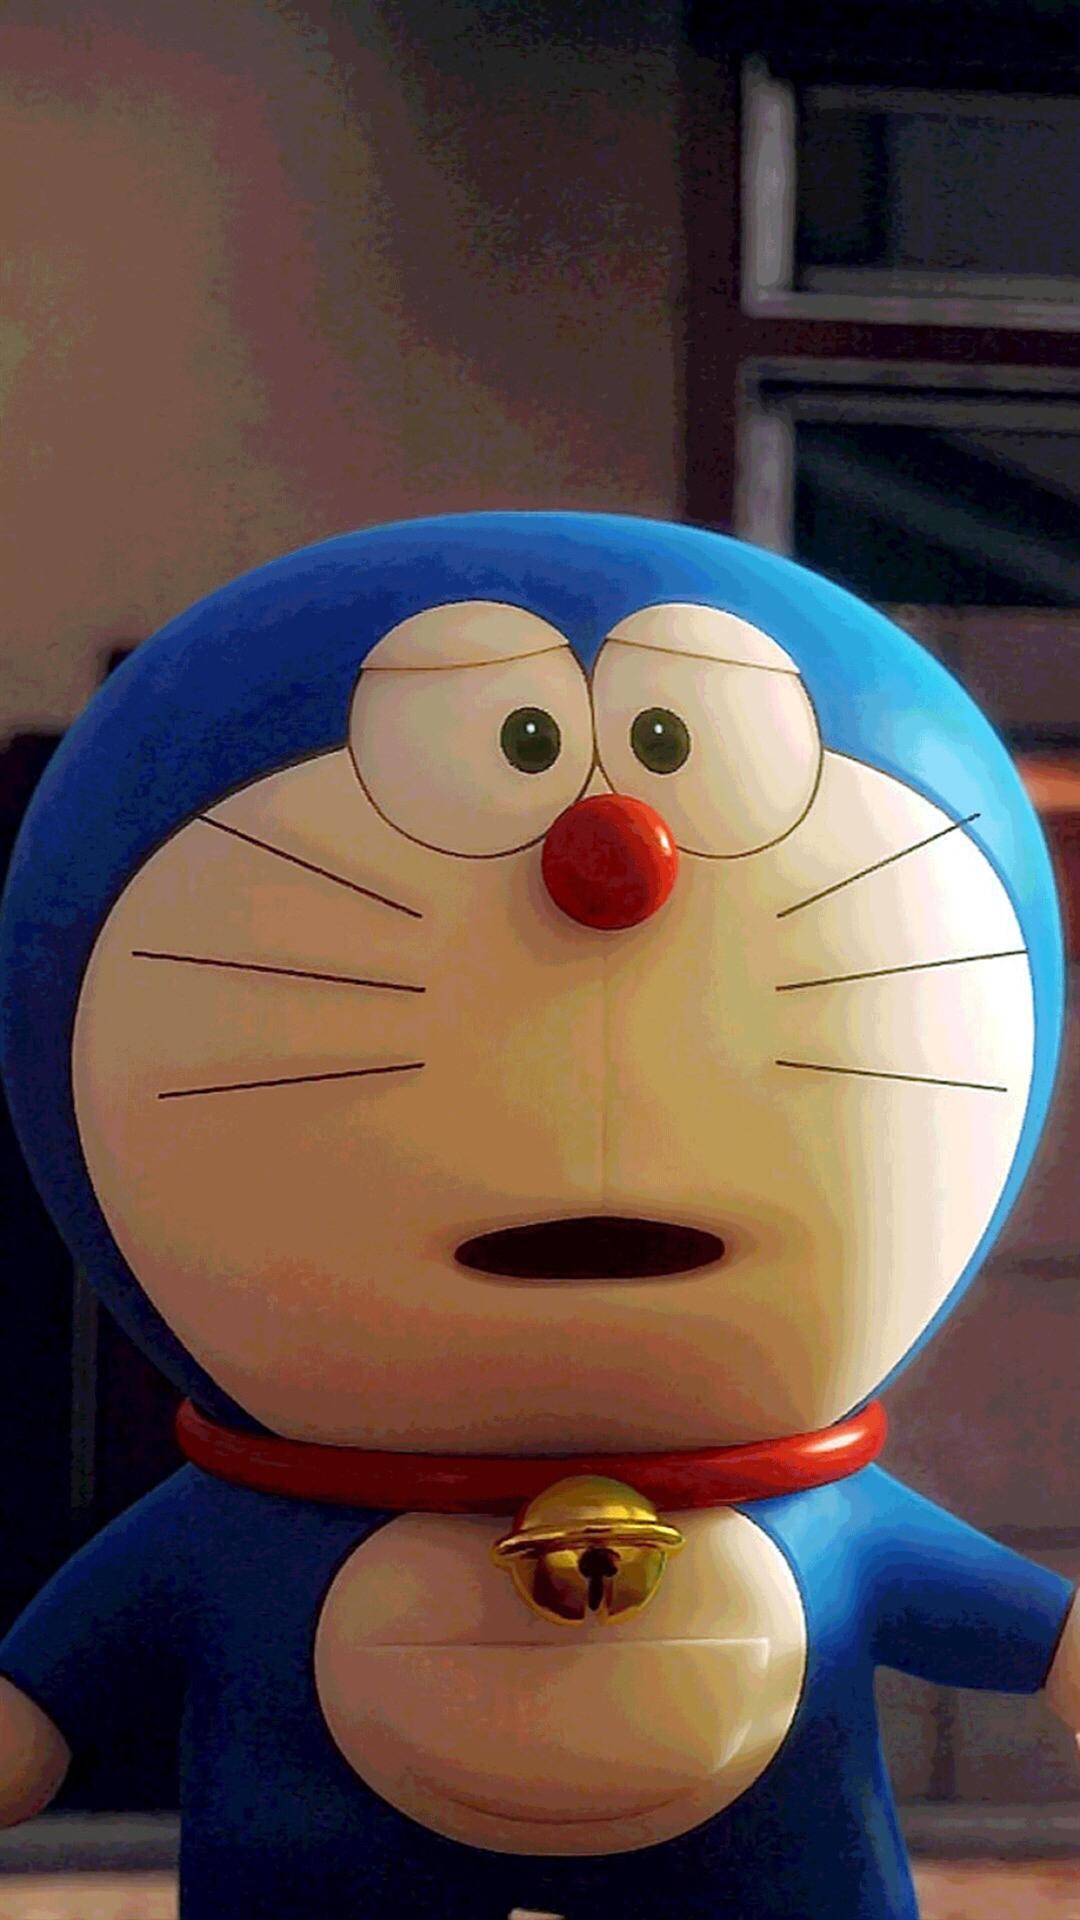 Cute Doraemon Cartoon iPhone 8 Wallpaper Free Download